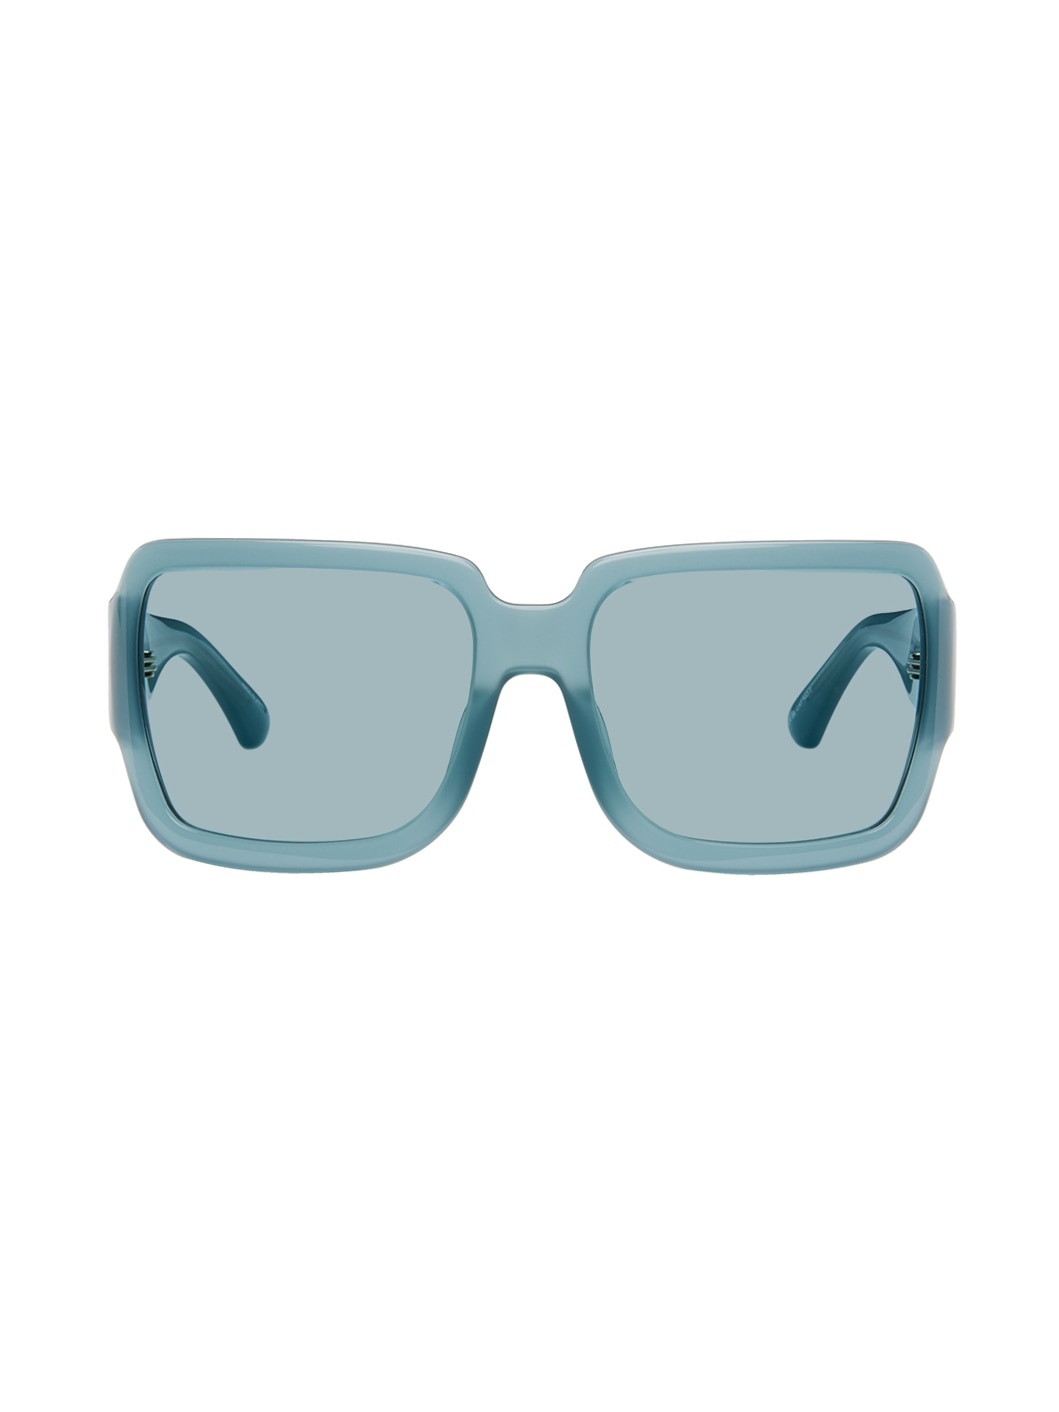 Blue Linda Farrow Edition Oversized Sunglasses - 1